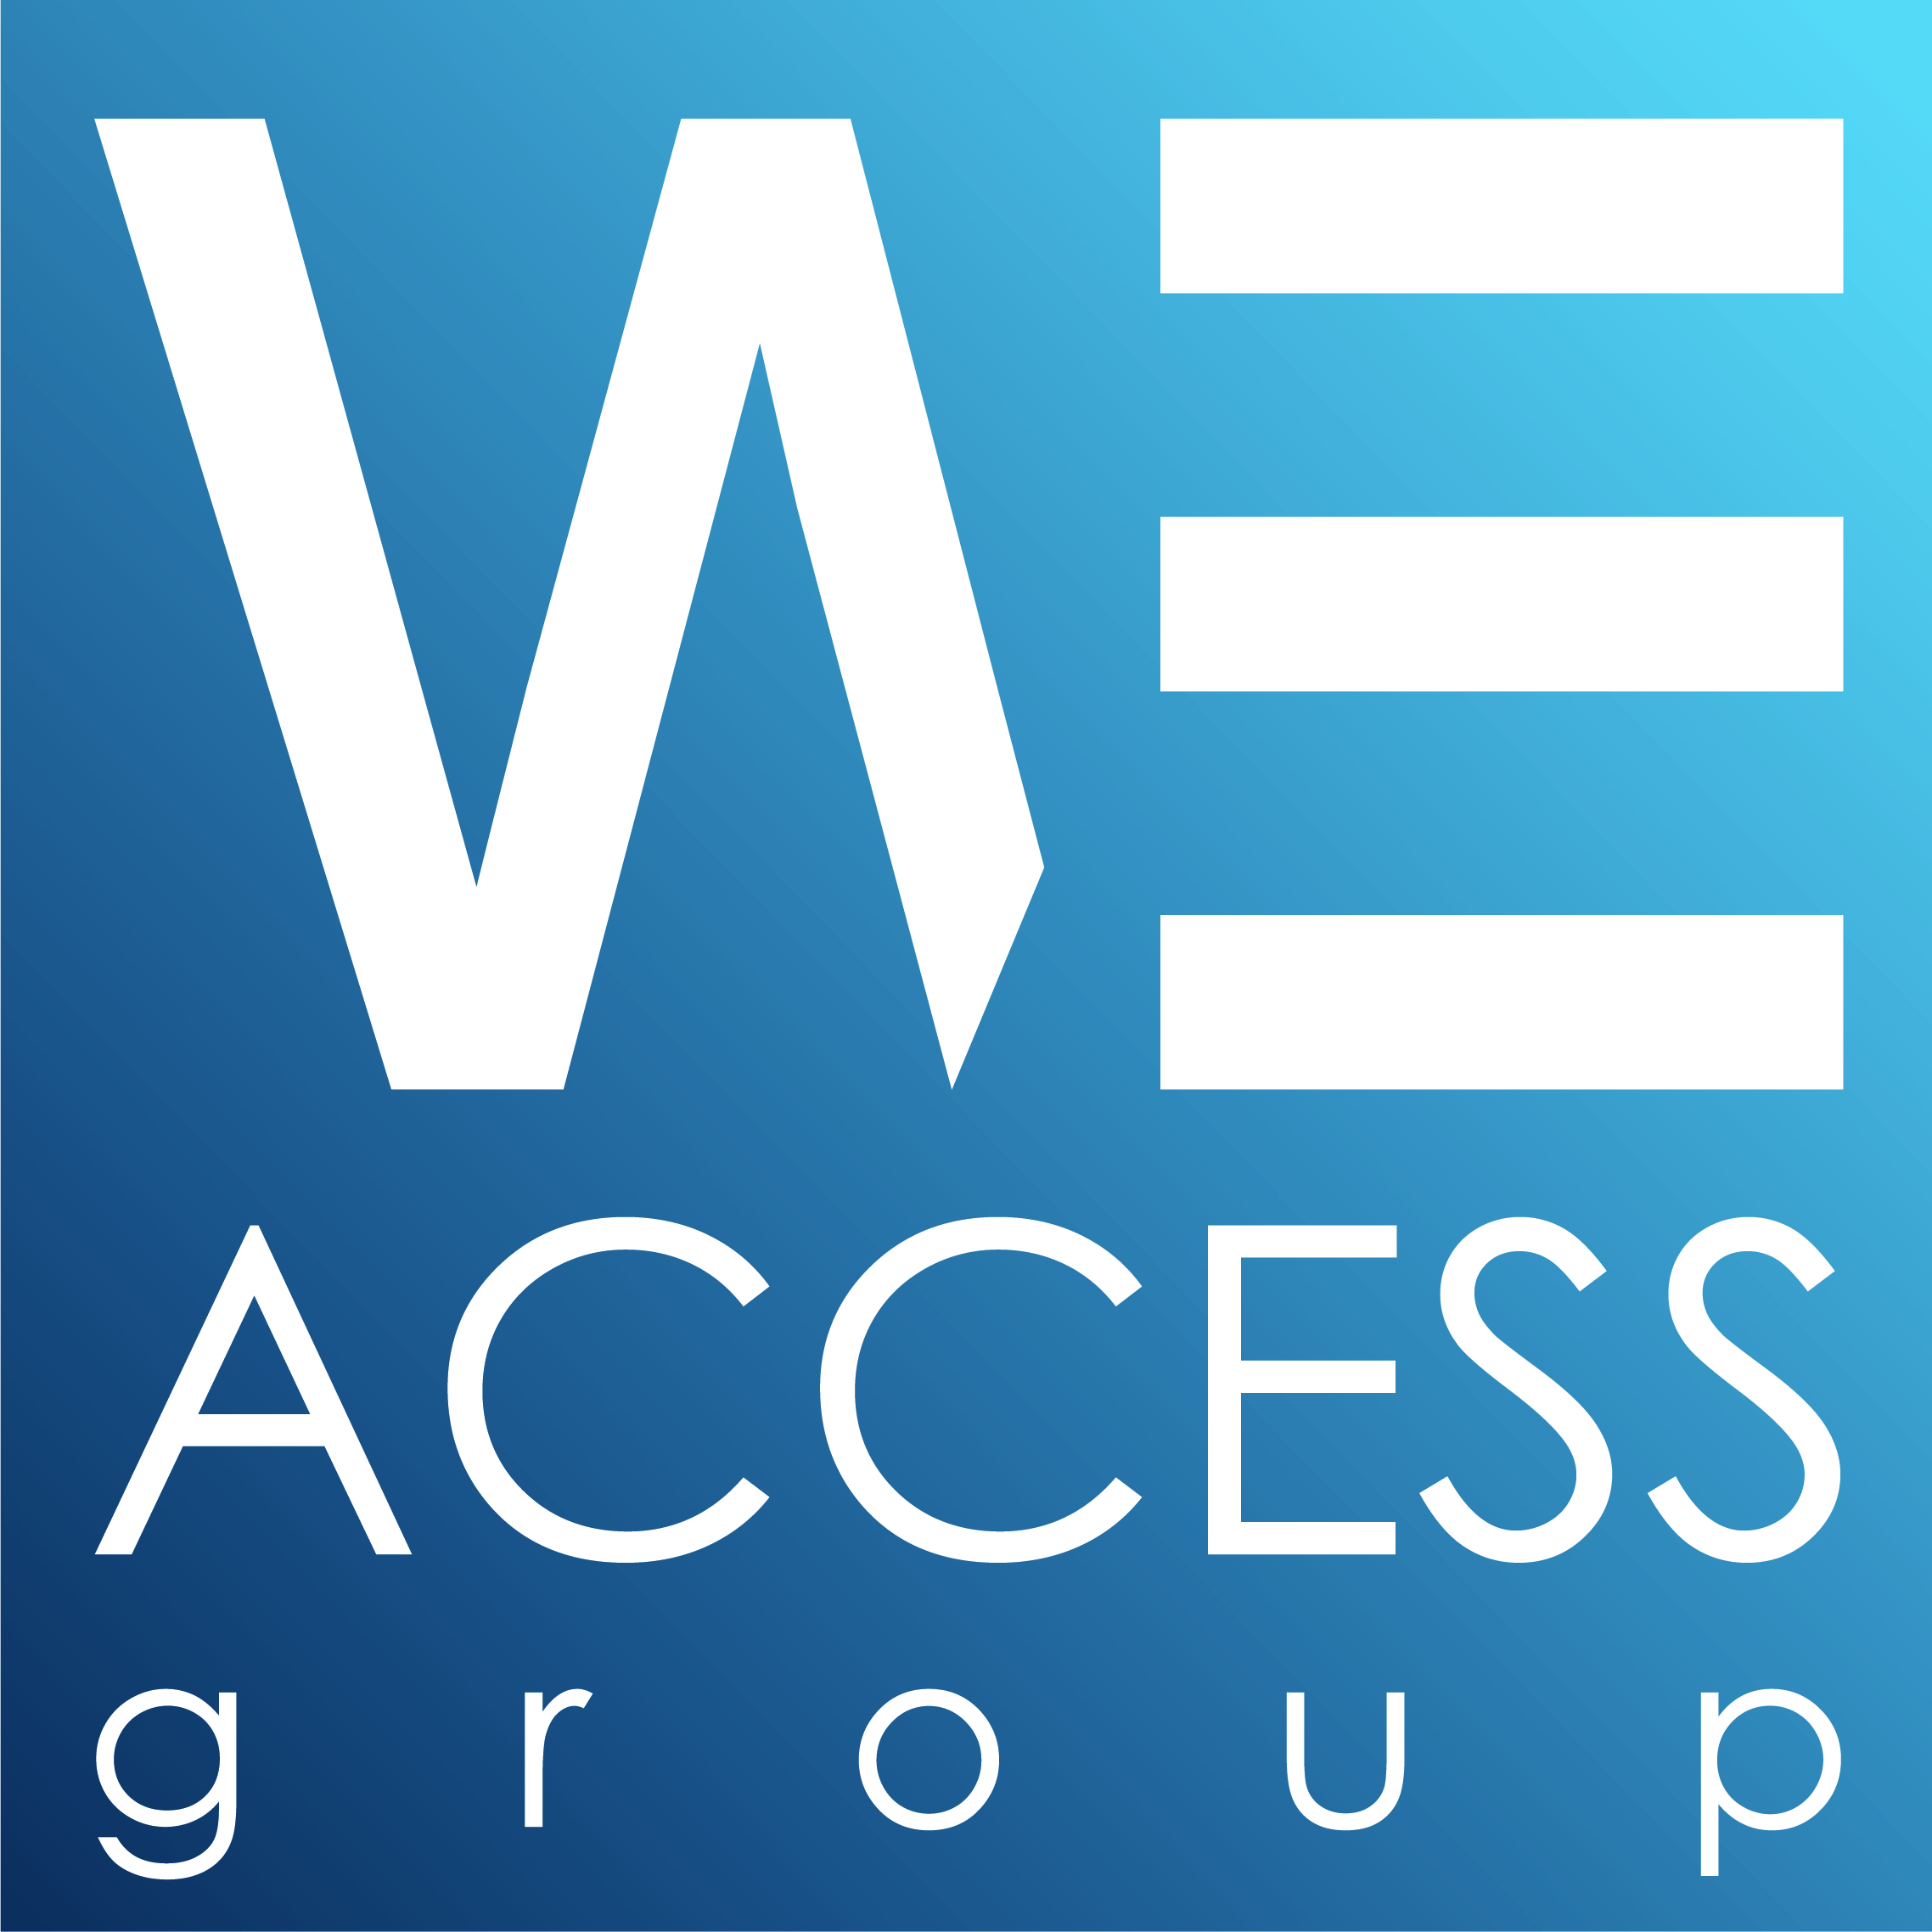 we access